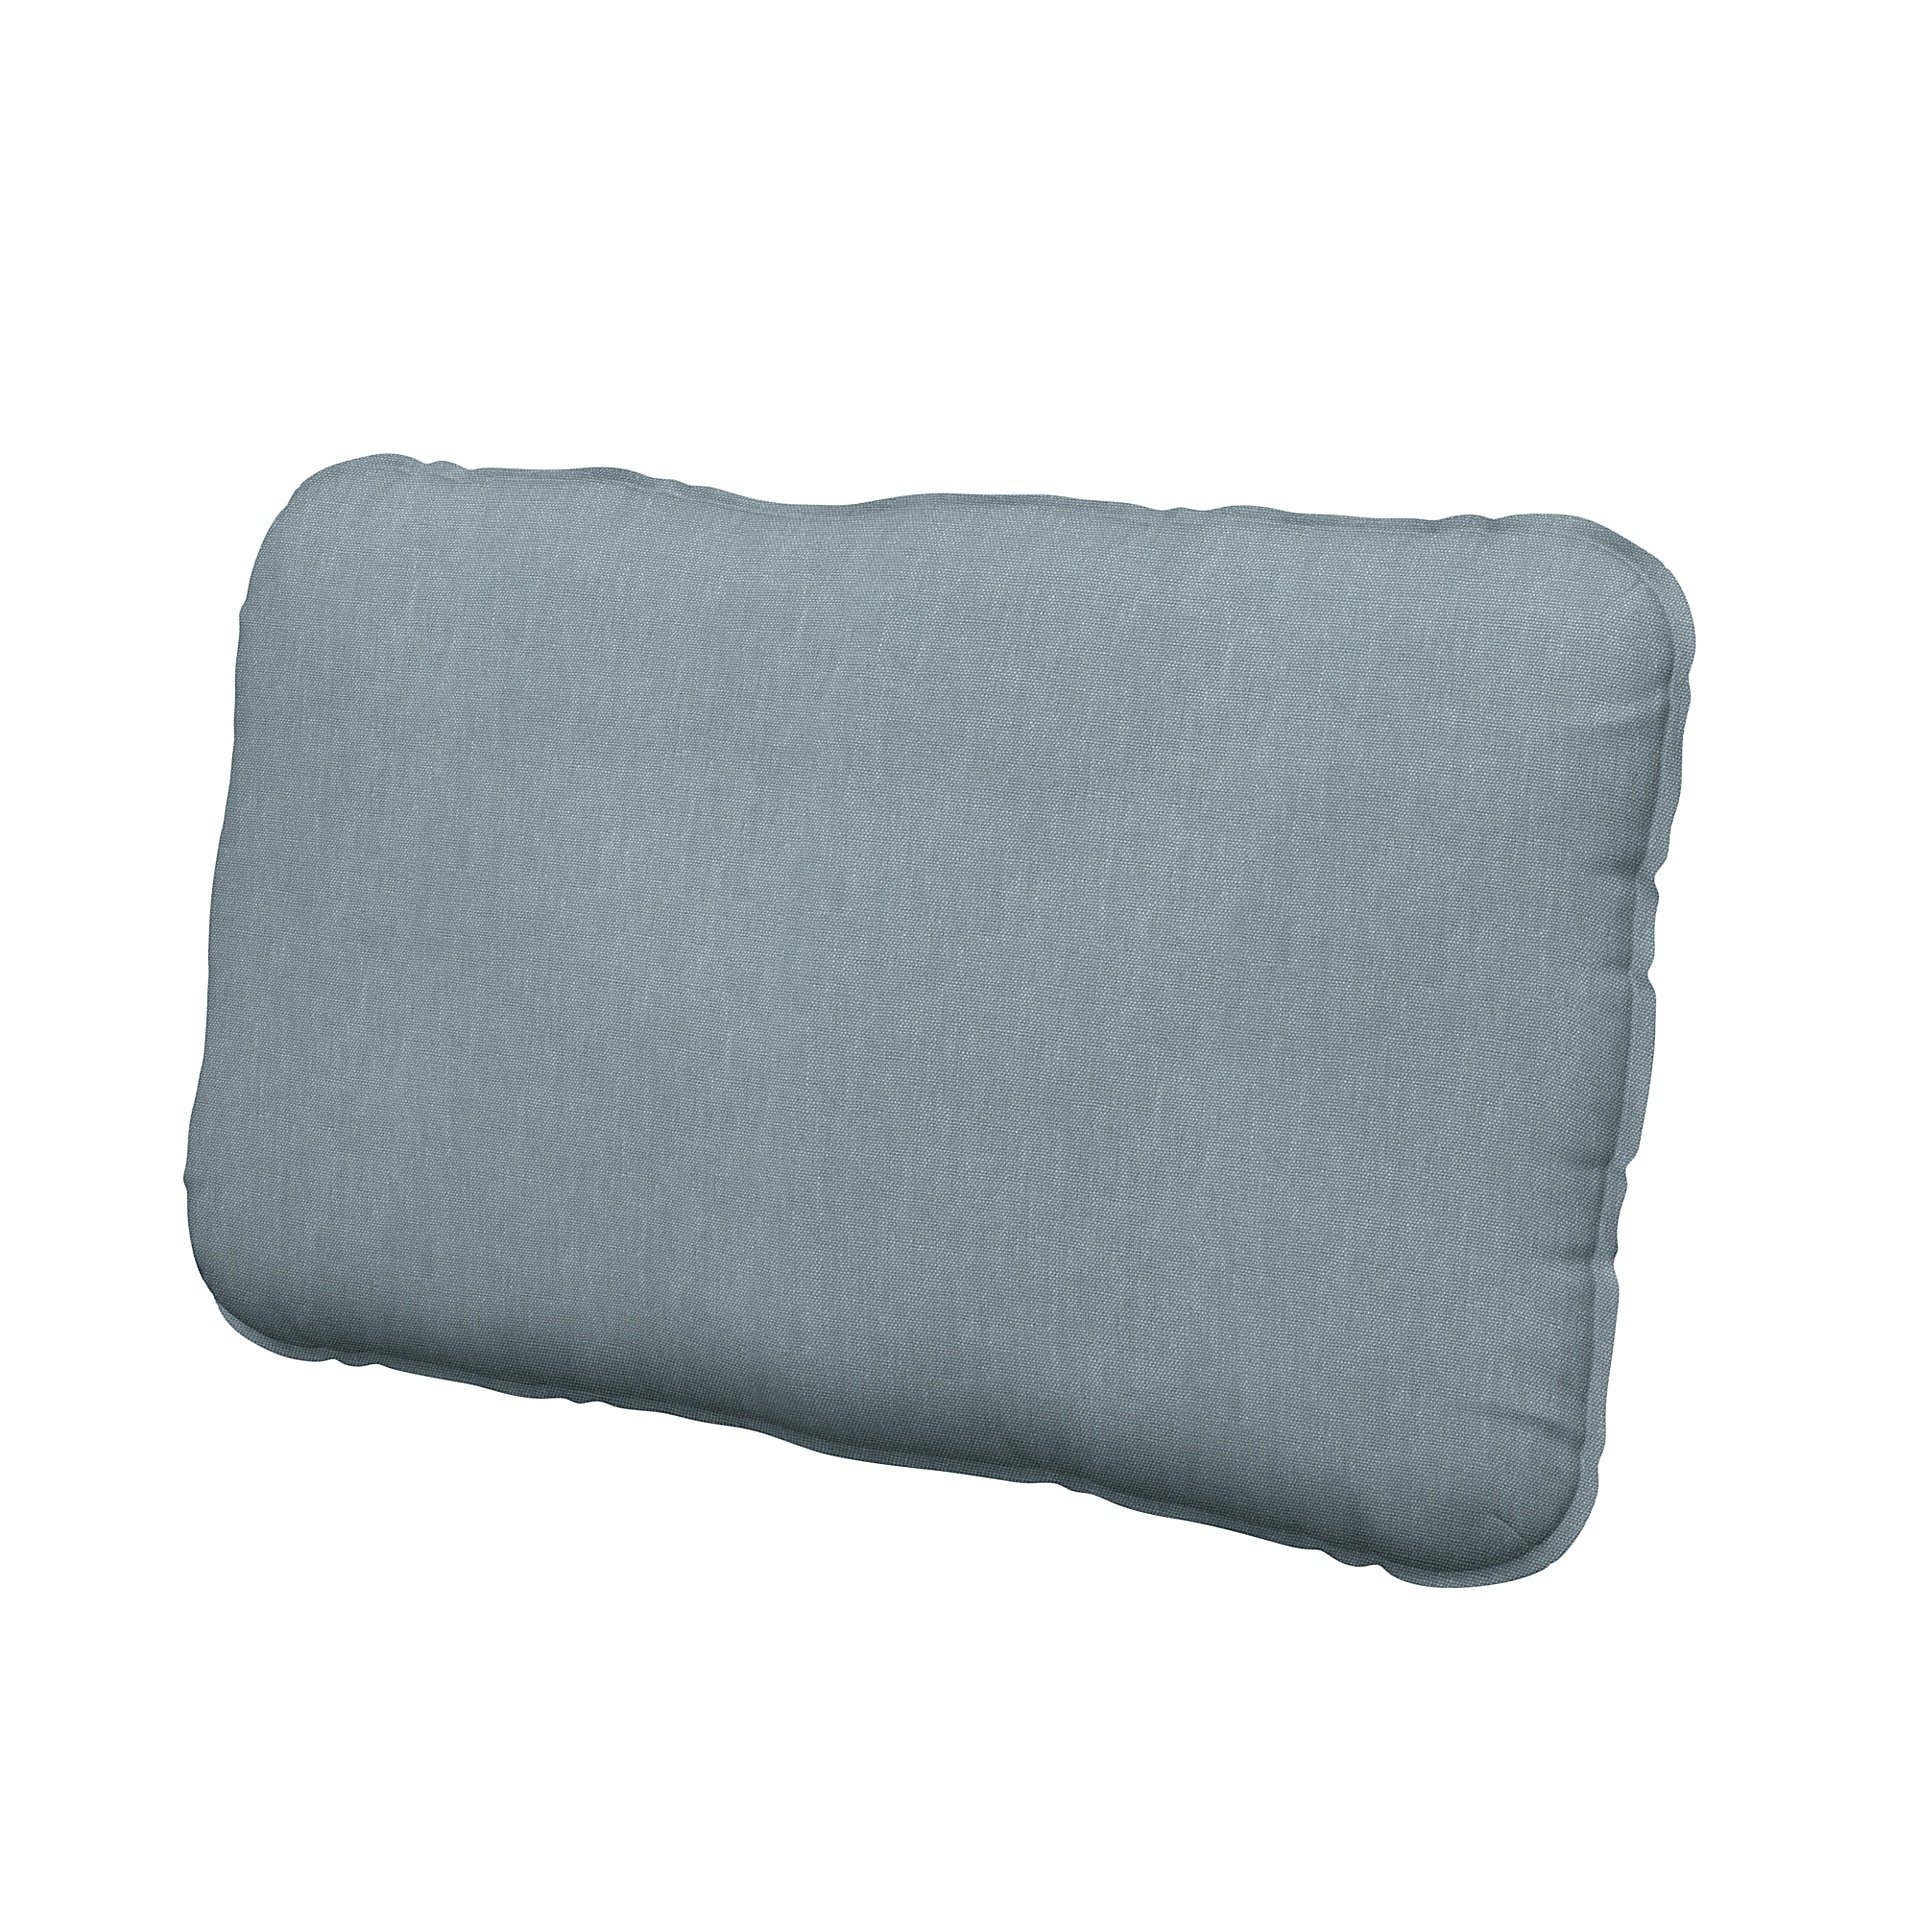 IKEA - Vallentuna back cushion cover 40x75cm, Dusty Blue, Linen - Bemz